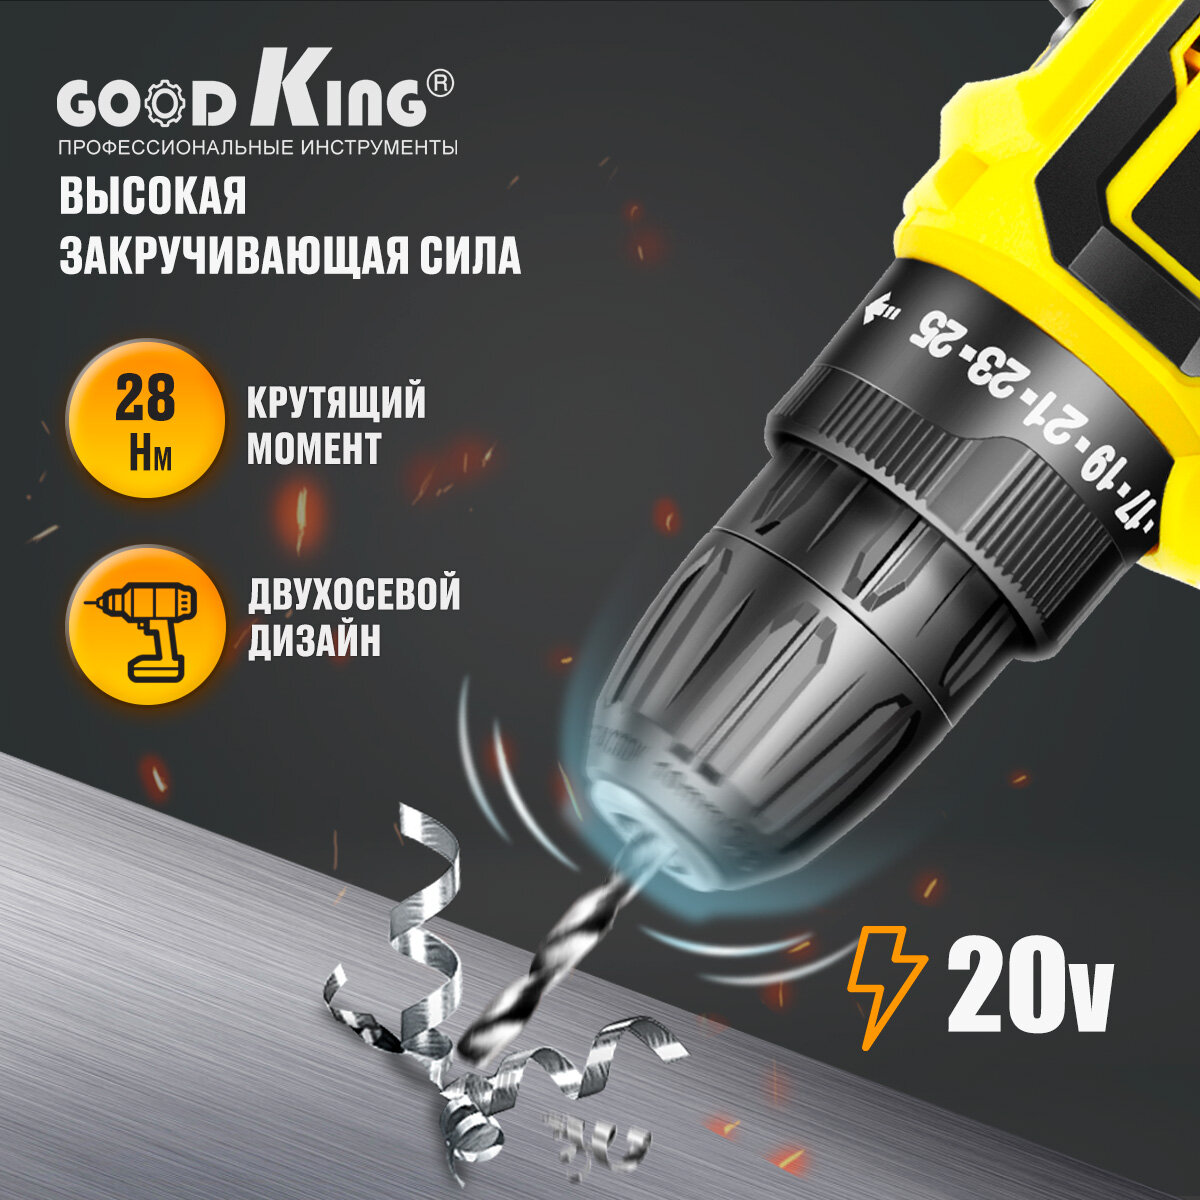 Goodking Аккумуляторная дрель-шуруповёрт KL-102001, 1.5 Ah 20V 28Нм С 1 АКБ